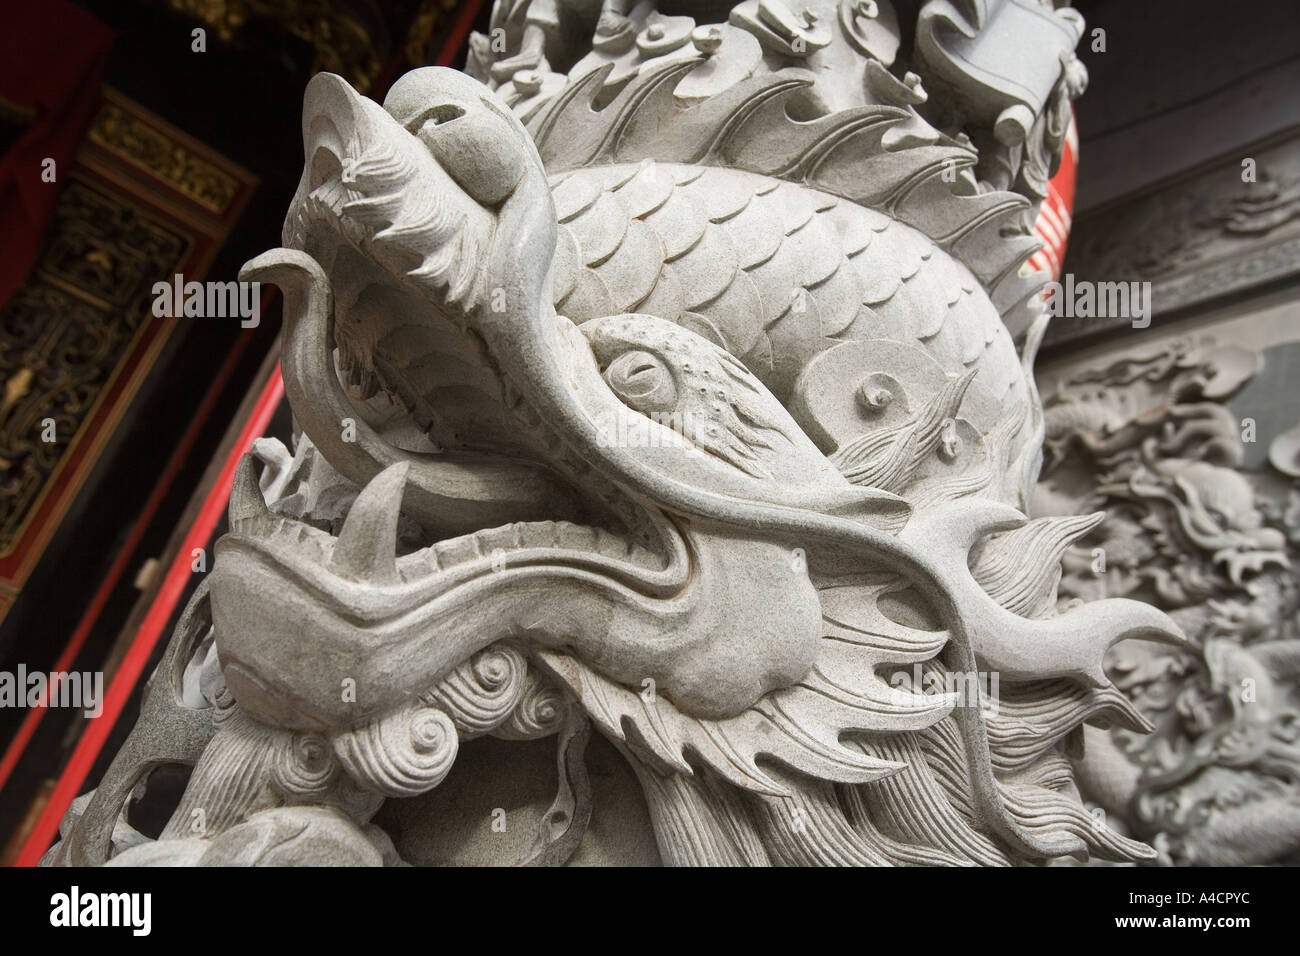 Malaysia Melaka Jalan Tun Tan Cheng Lock Eng Choon Chinese Temple stone carving Stock Photo